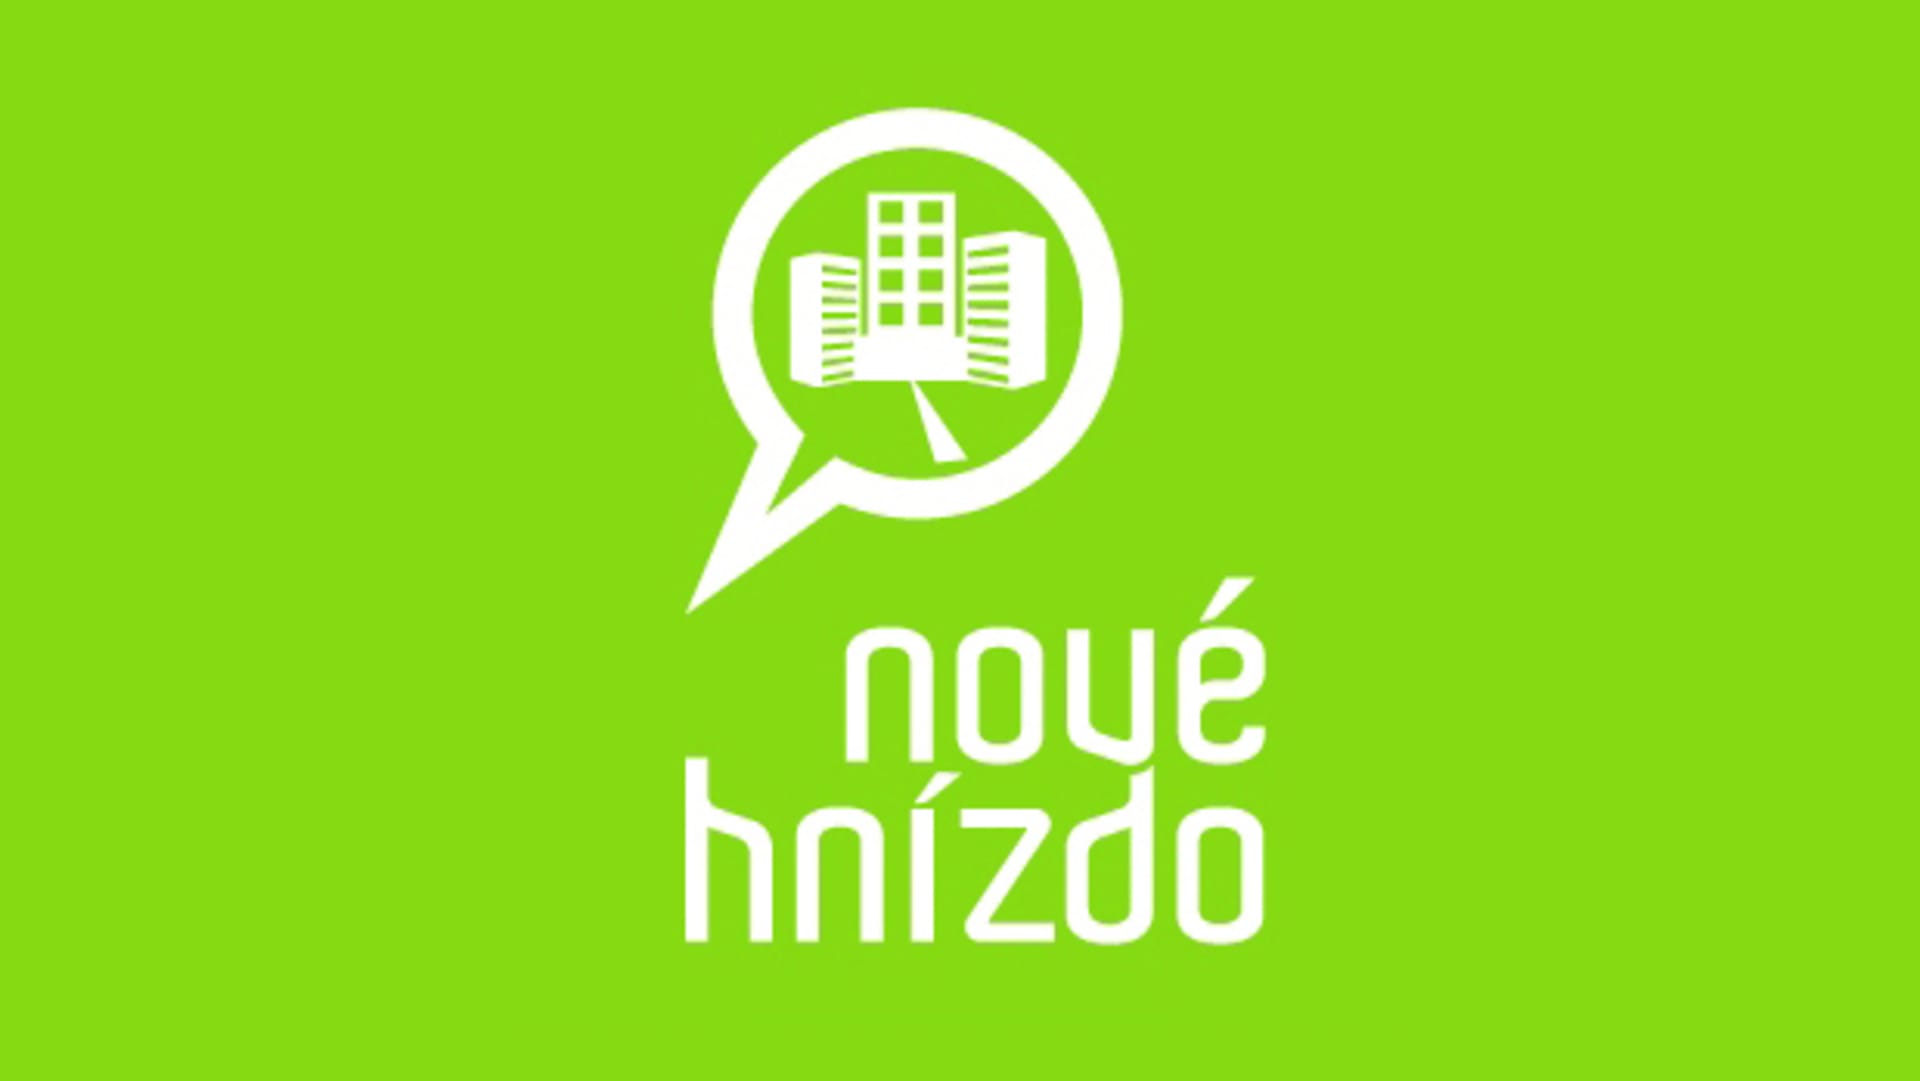 Nové hnízdo logo zelené